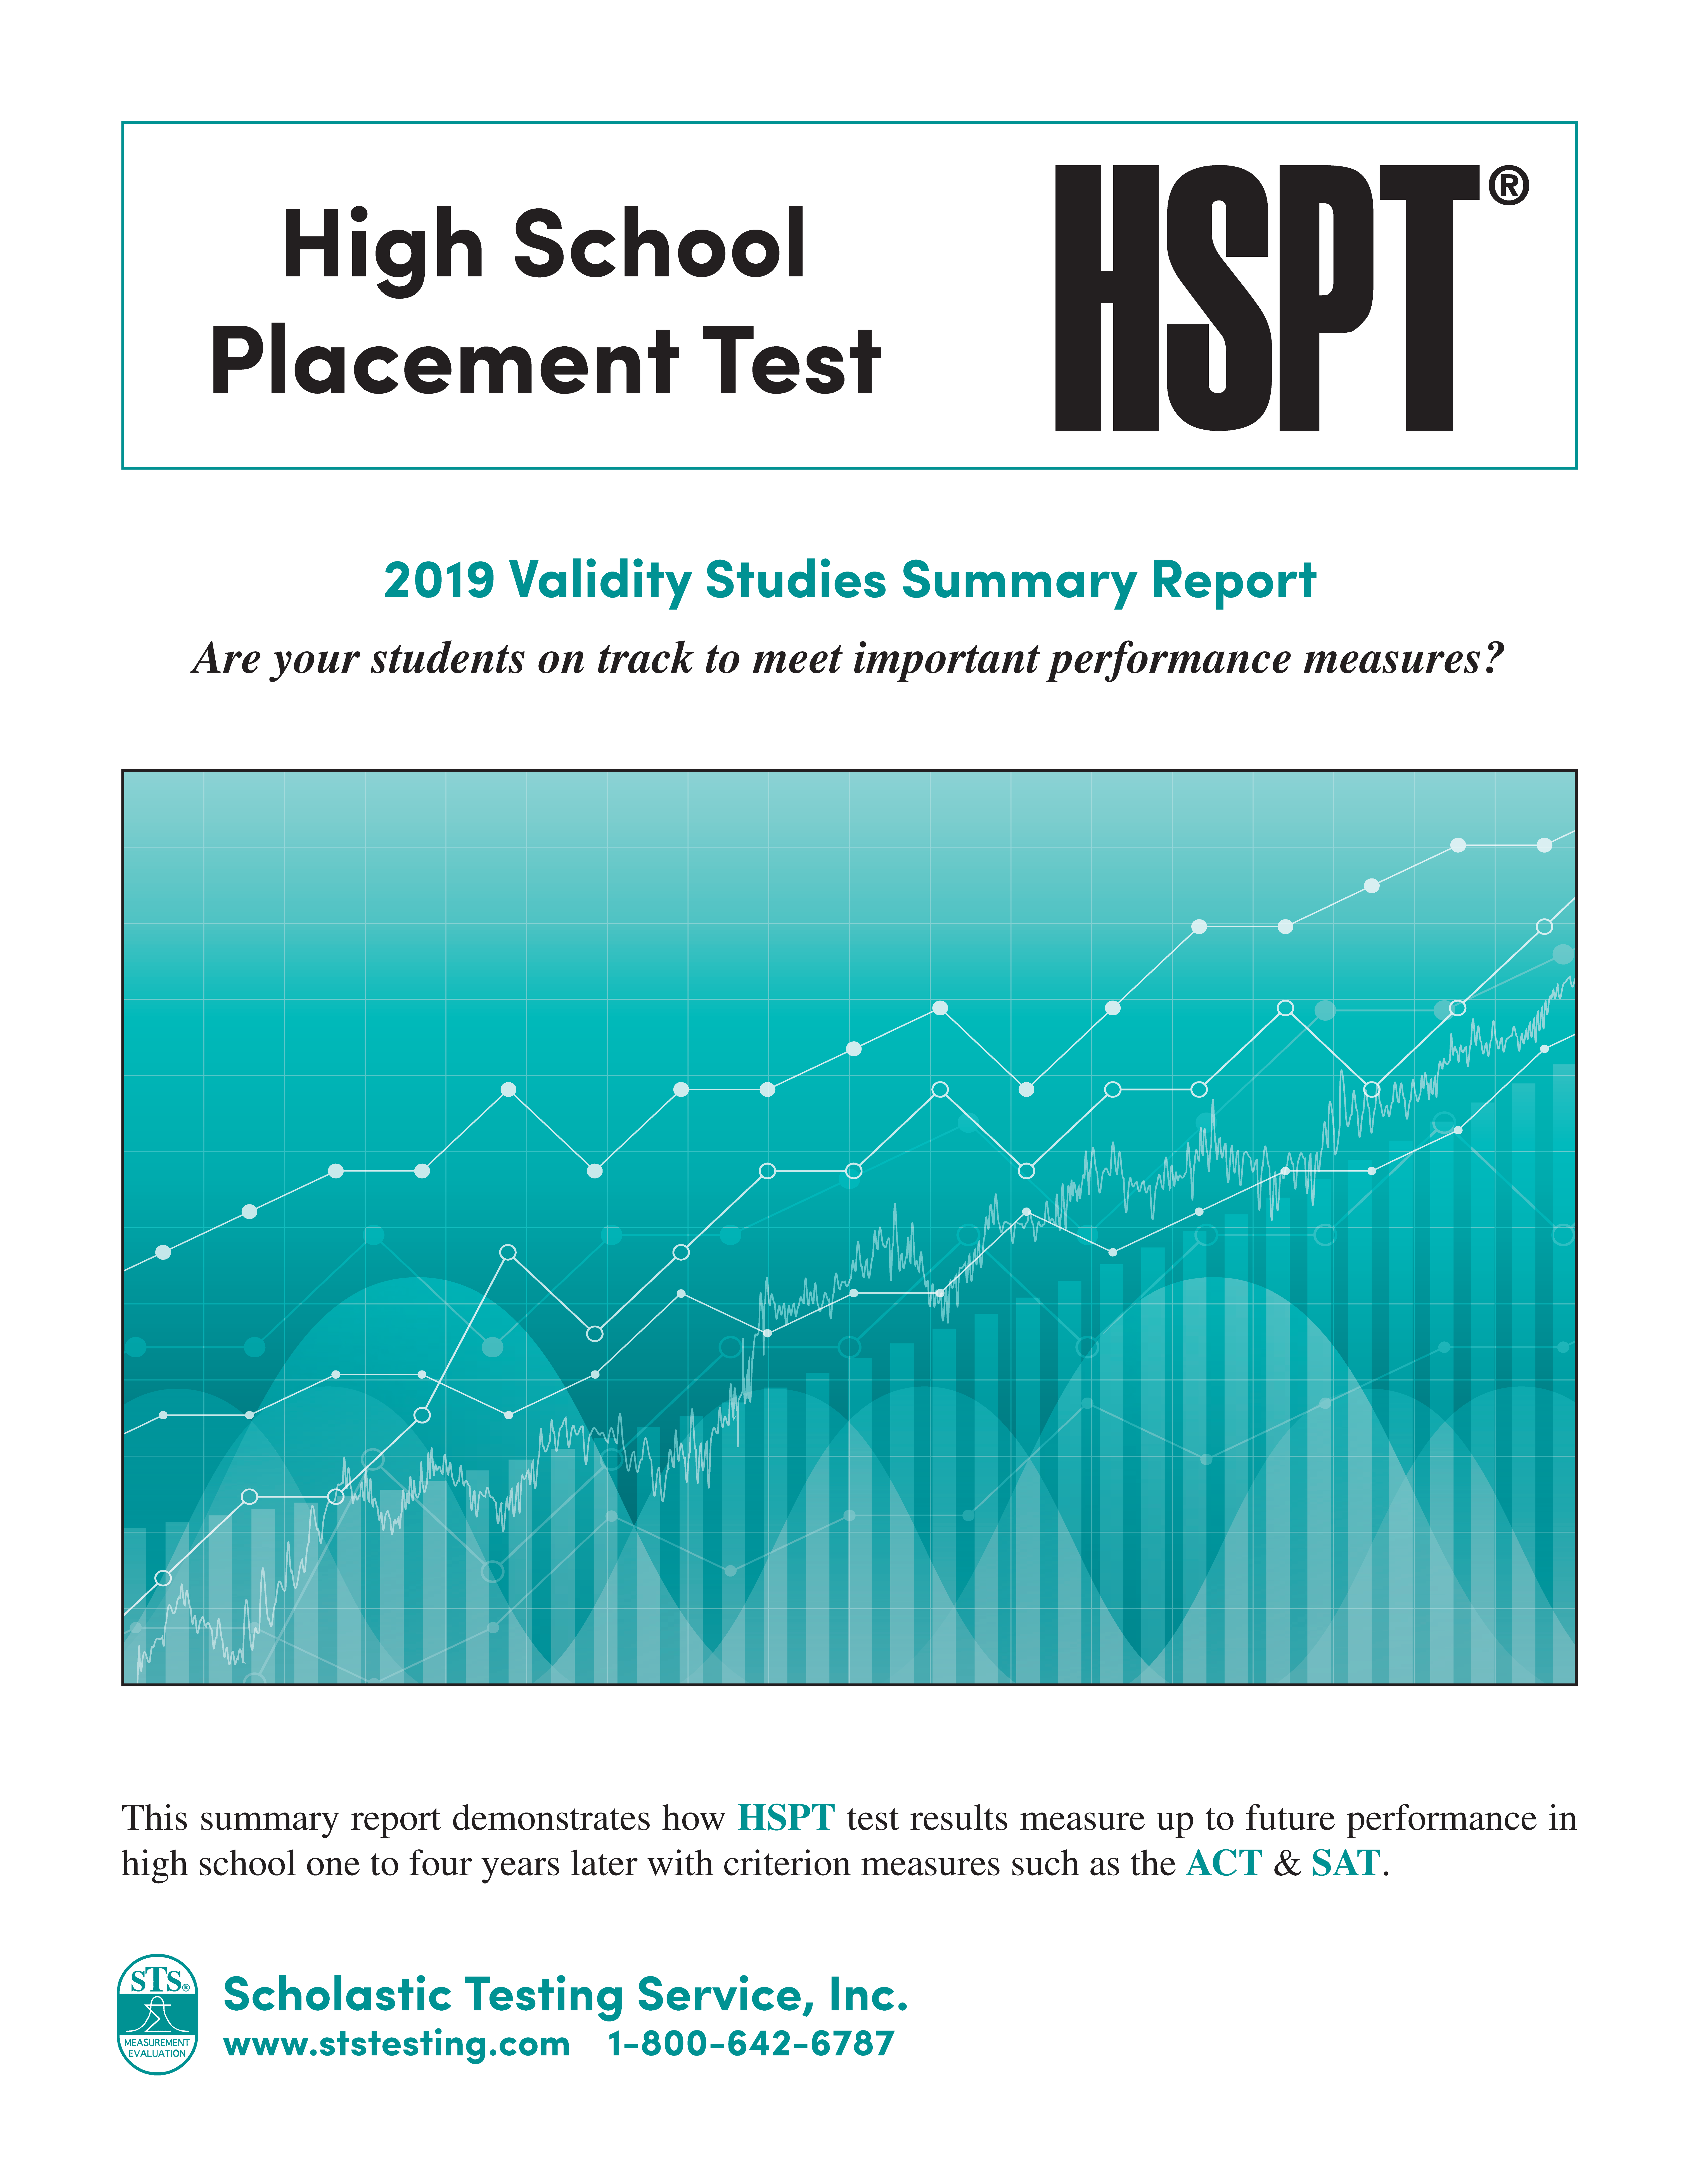 HSPT Validity Study 2019